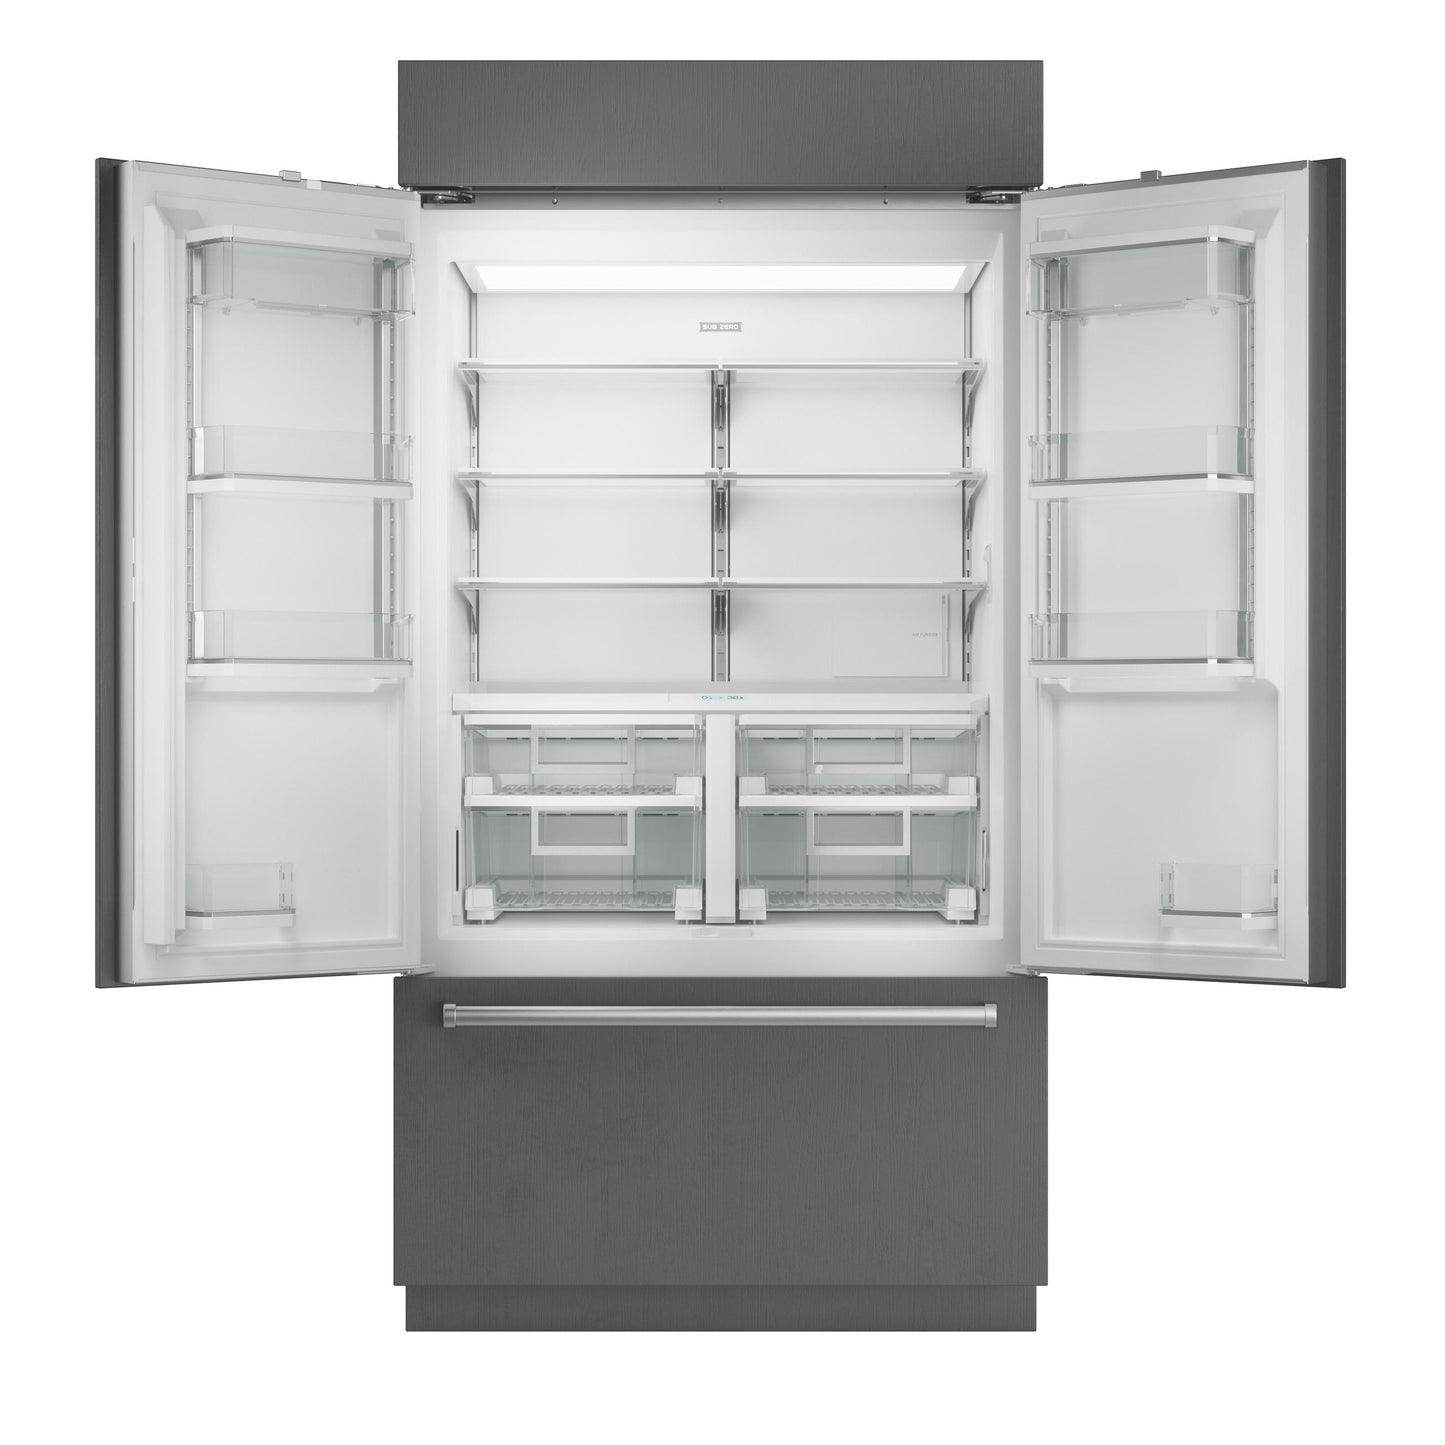 Sub-Zero CL4250UFDIDST 42" Classic French Door Refrigerator/Freezer With Internal Dispenser